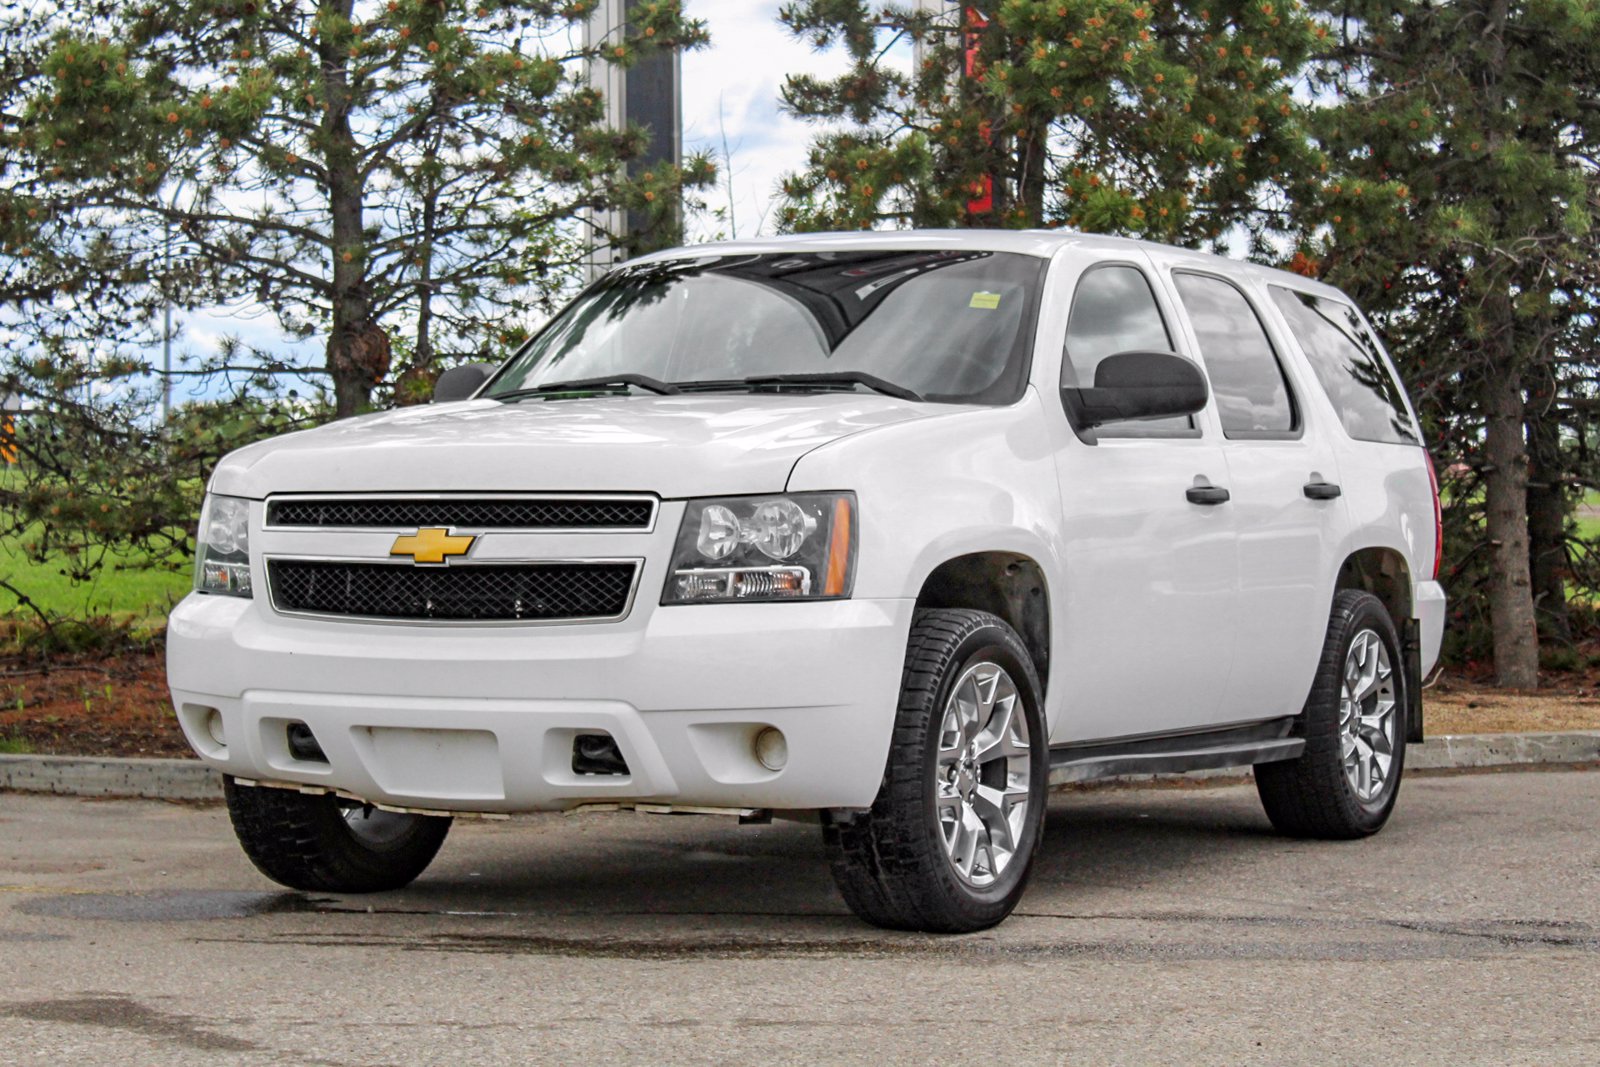 PreOwned 2014 Chevrolet Tahoe Police Interceptor 4WD